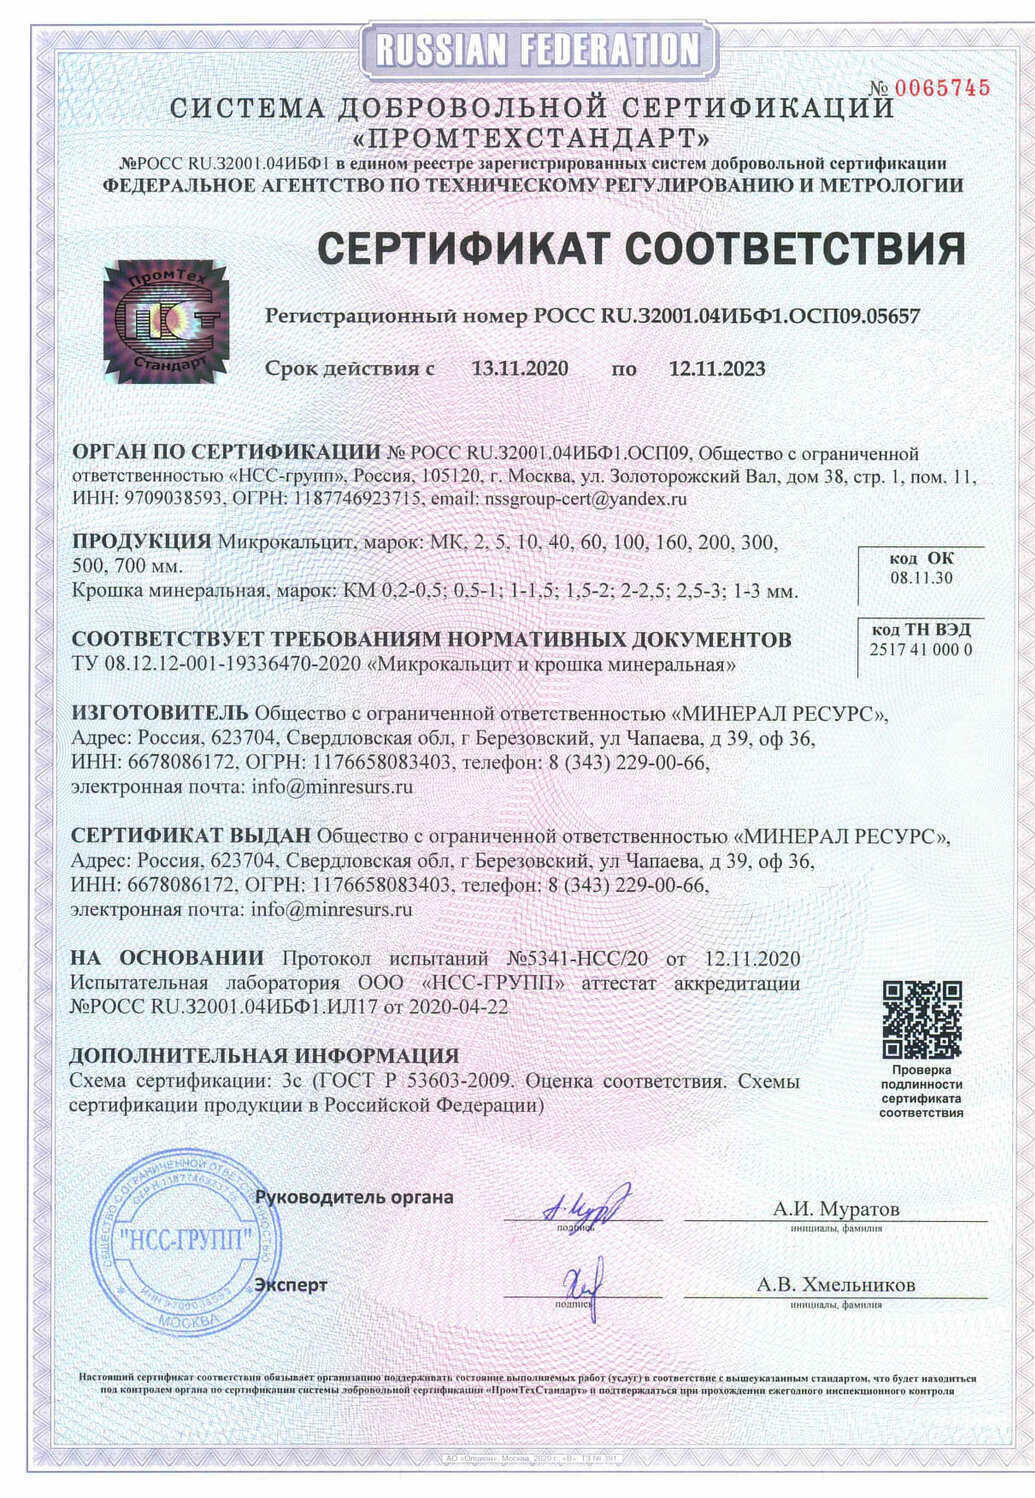 Сертификат: Мраморная крошка ТУ 08.12.12-001-19336470-2020